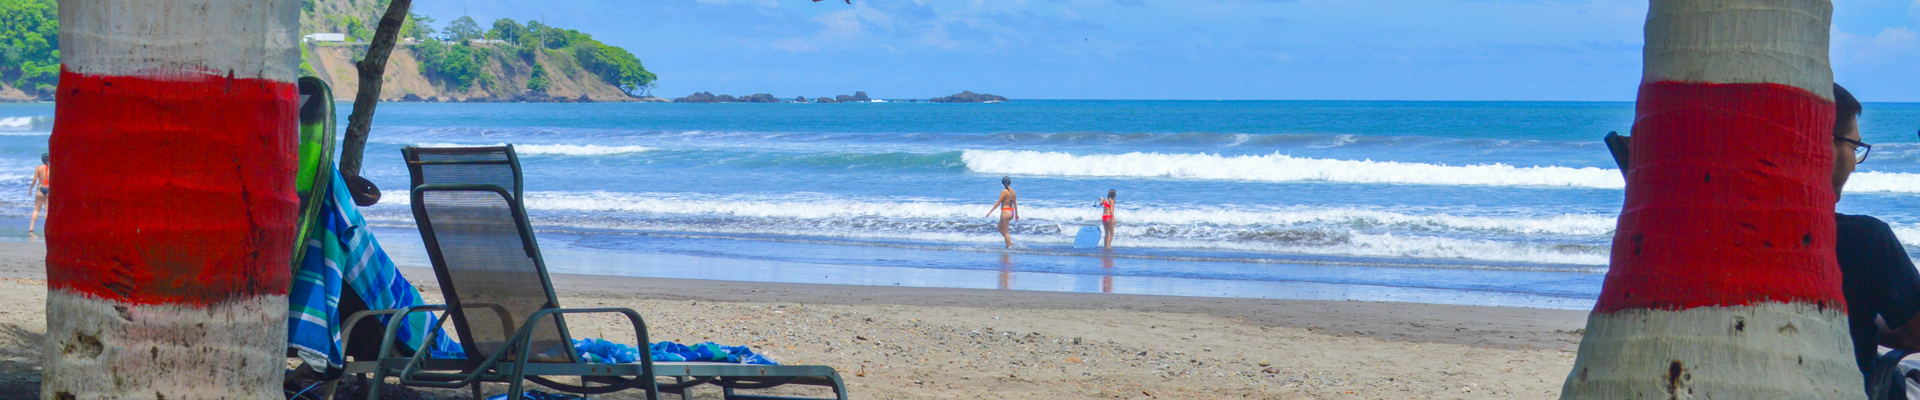 Jaco Beach, Costa Rica